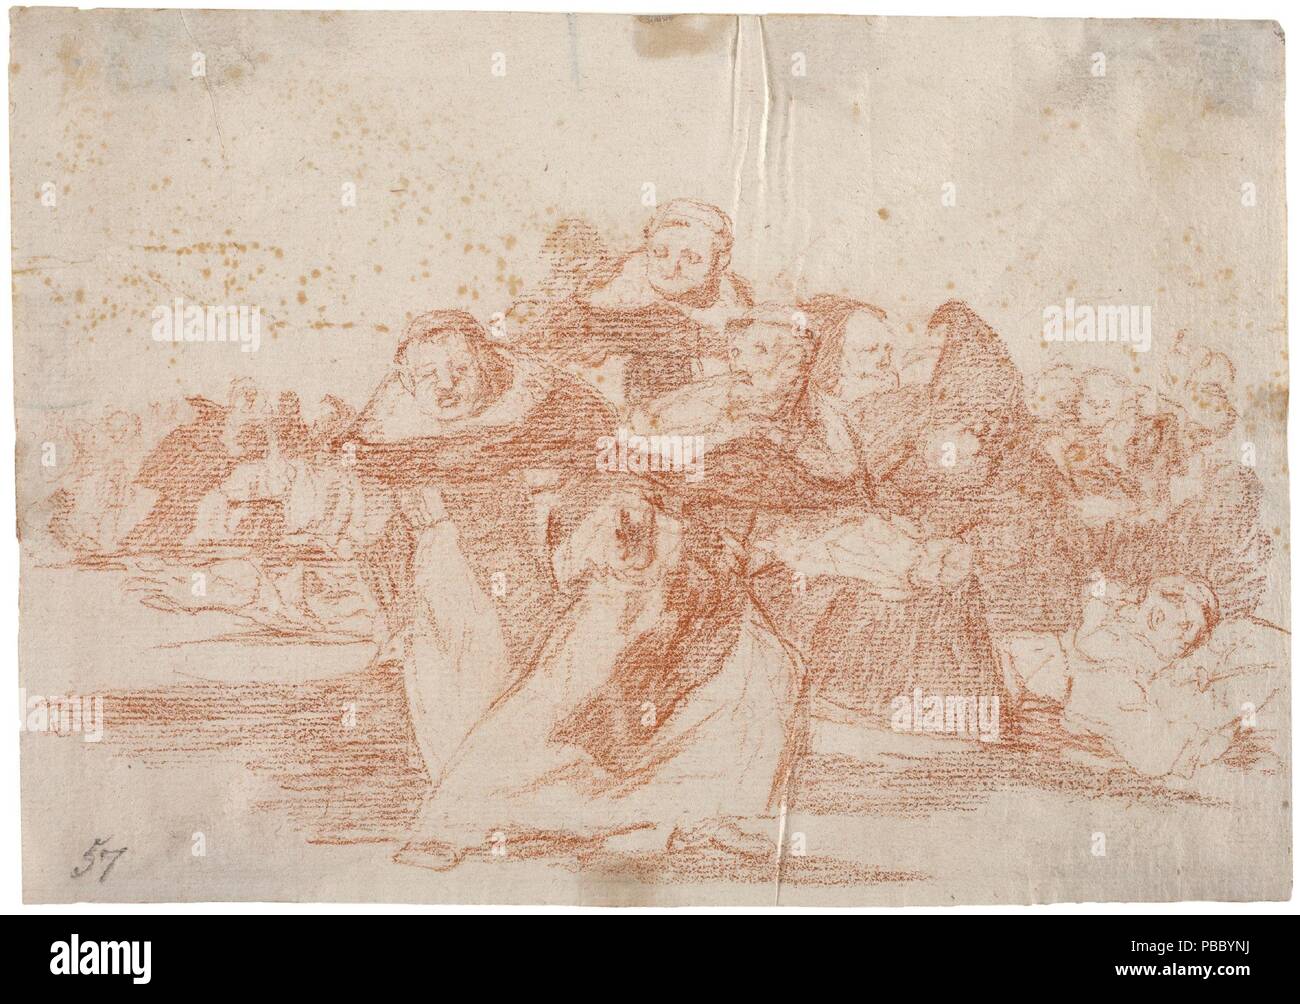 Francisco de Goya y Lucientes/' ist alles auf den Kopf gestellt". 1810 - 1814. Rote Kreide auf Elfenbein Bütten. Museum: Museo del Prado, Madrid, España. Stockfoto